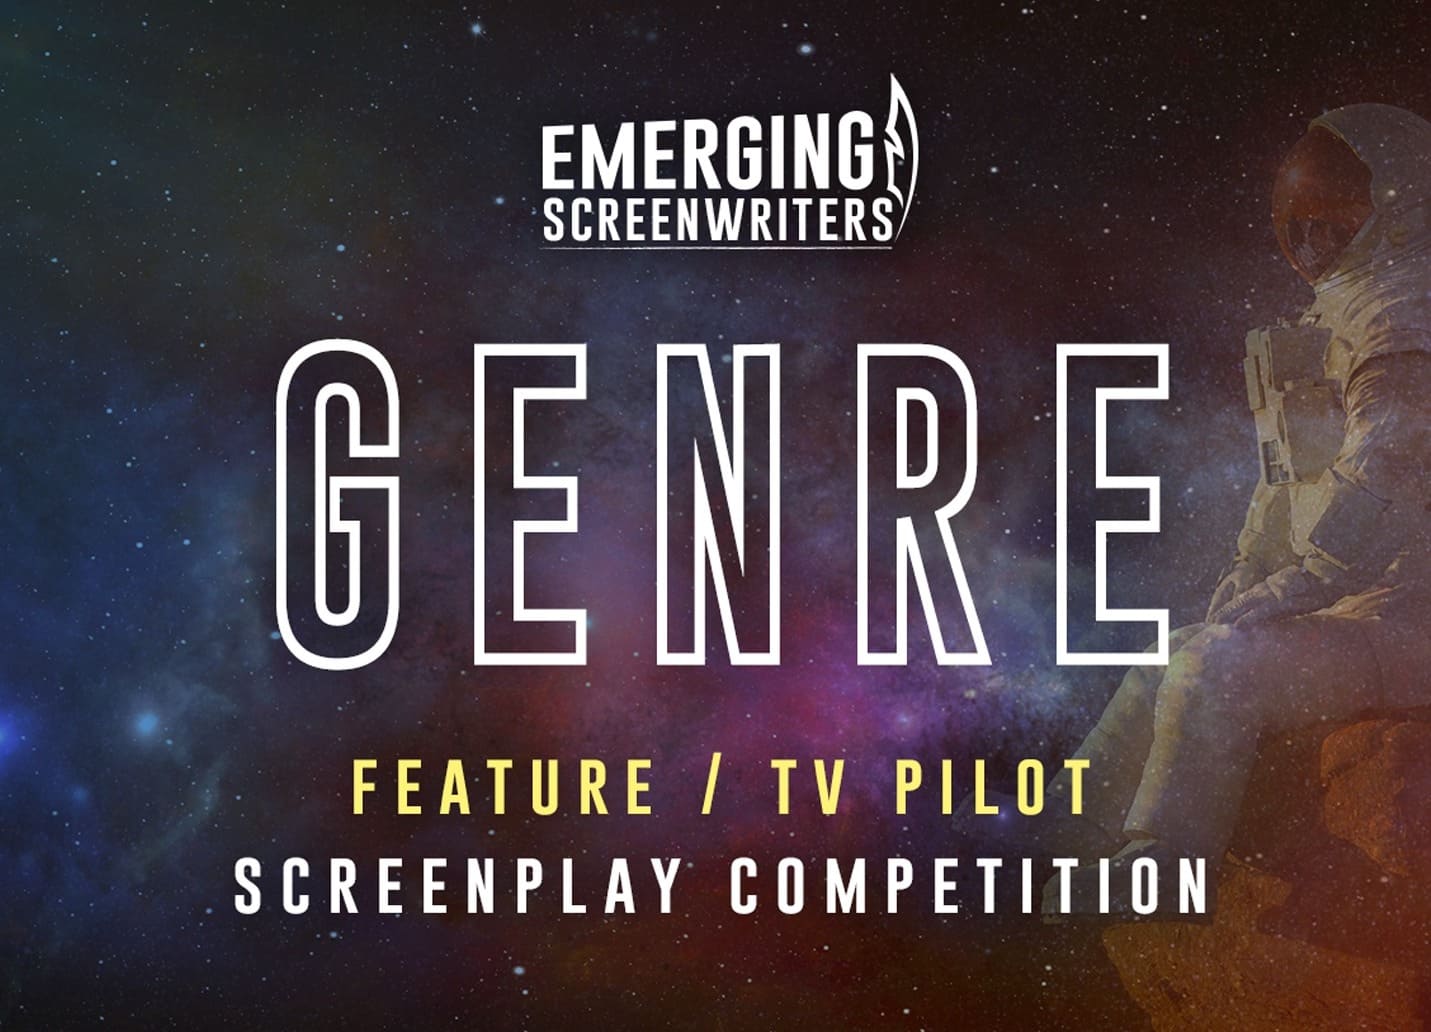 Emerging Screenwriters Screenplay Competition